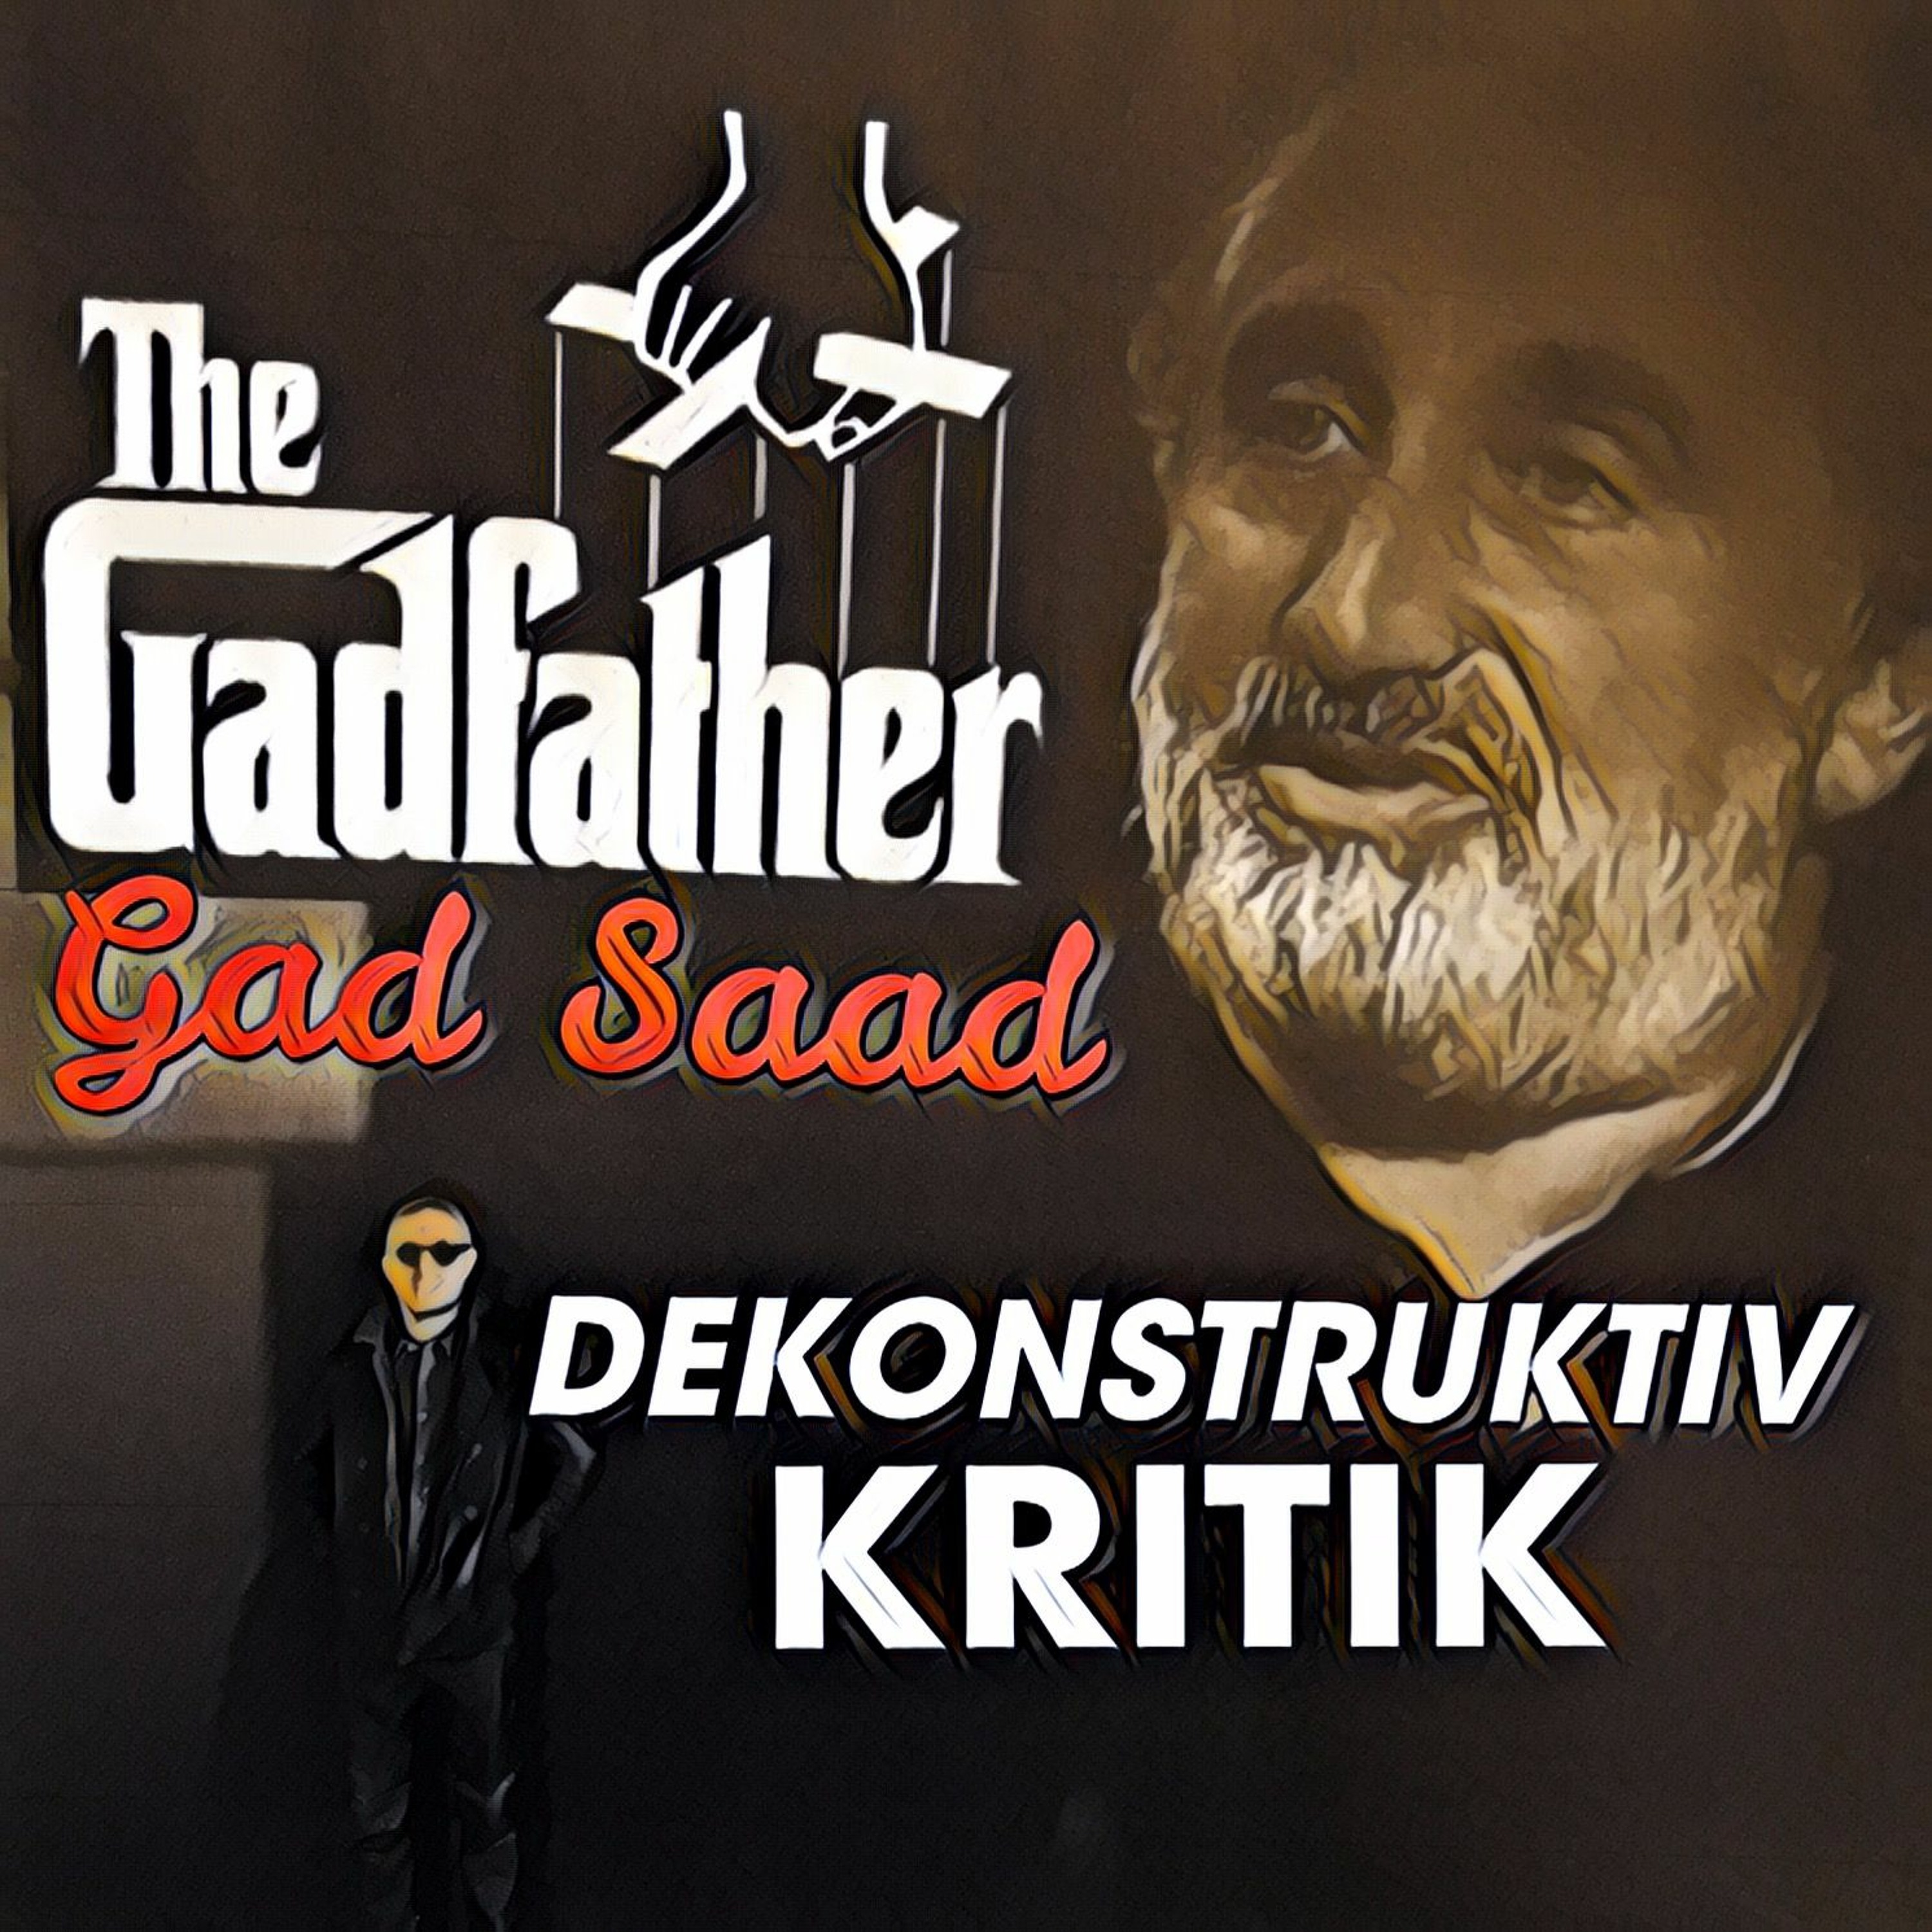 7.2 DEKONSTRUKTIV KRITIK - Gad Saad, the #Gadfather